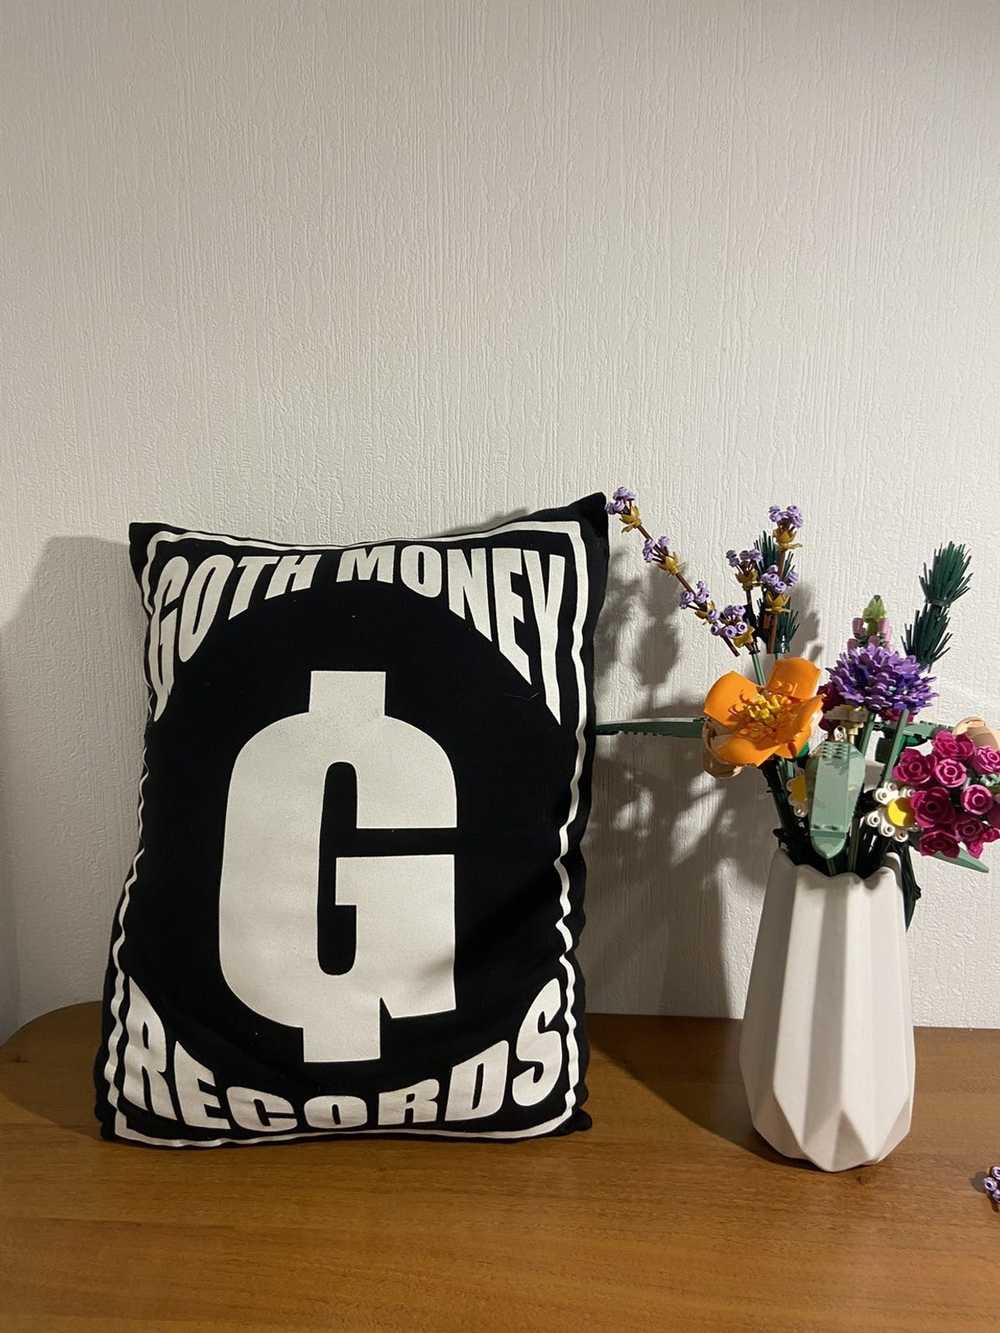 Goth Money Goth Money Records 2015 Pillow - image 1